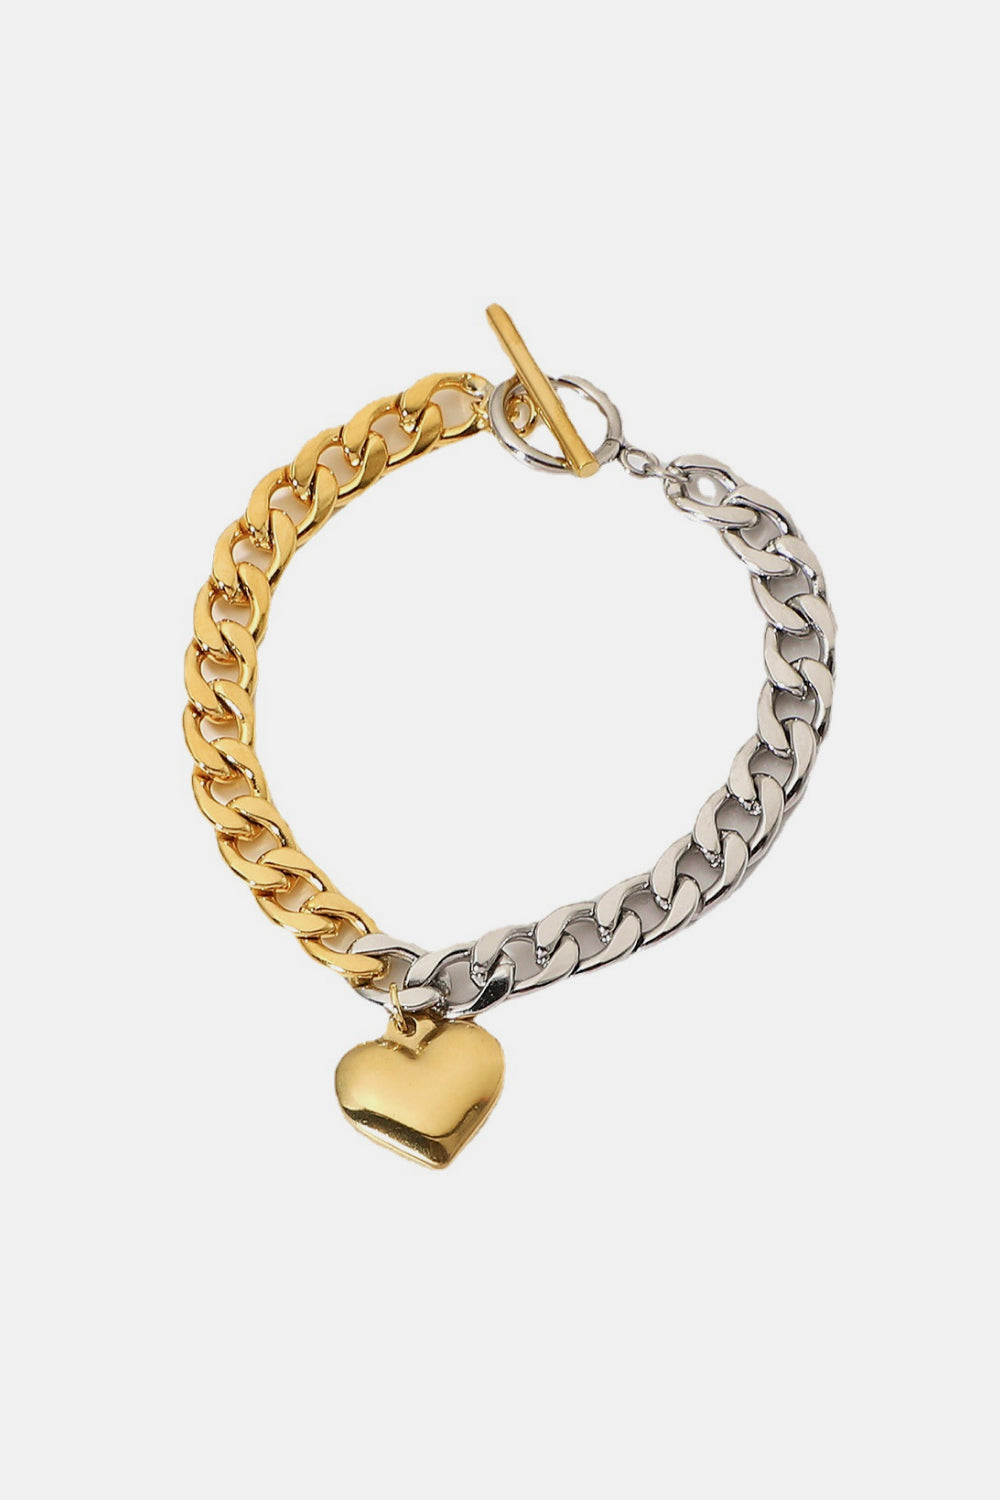 Trendsi Cupid Beauty Supplies Gold/Silver / One Size Woman Bracelets Chain Heart Charm Bracelet